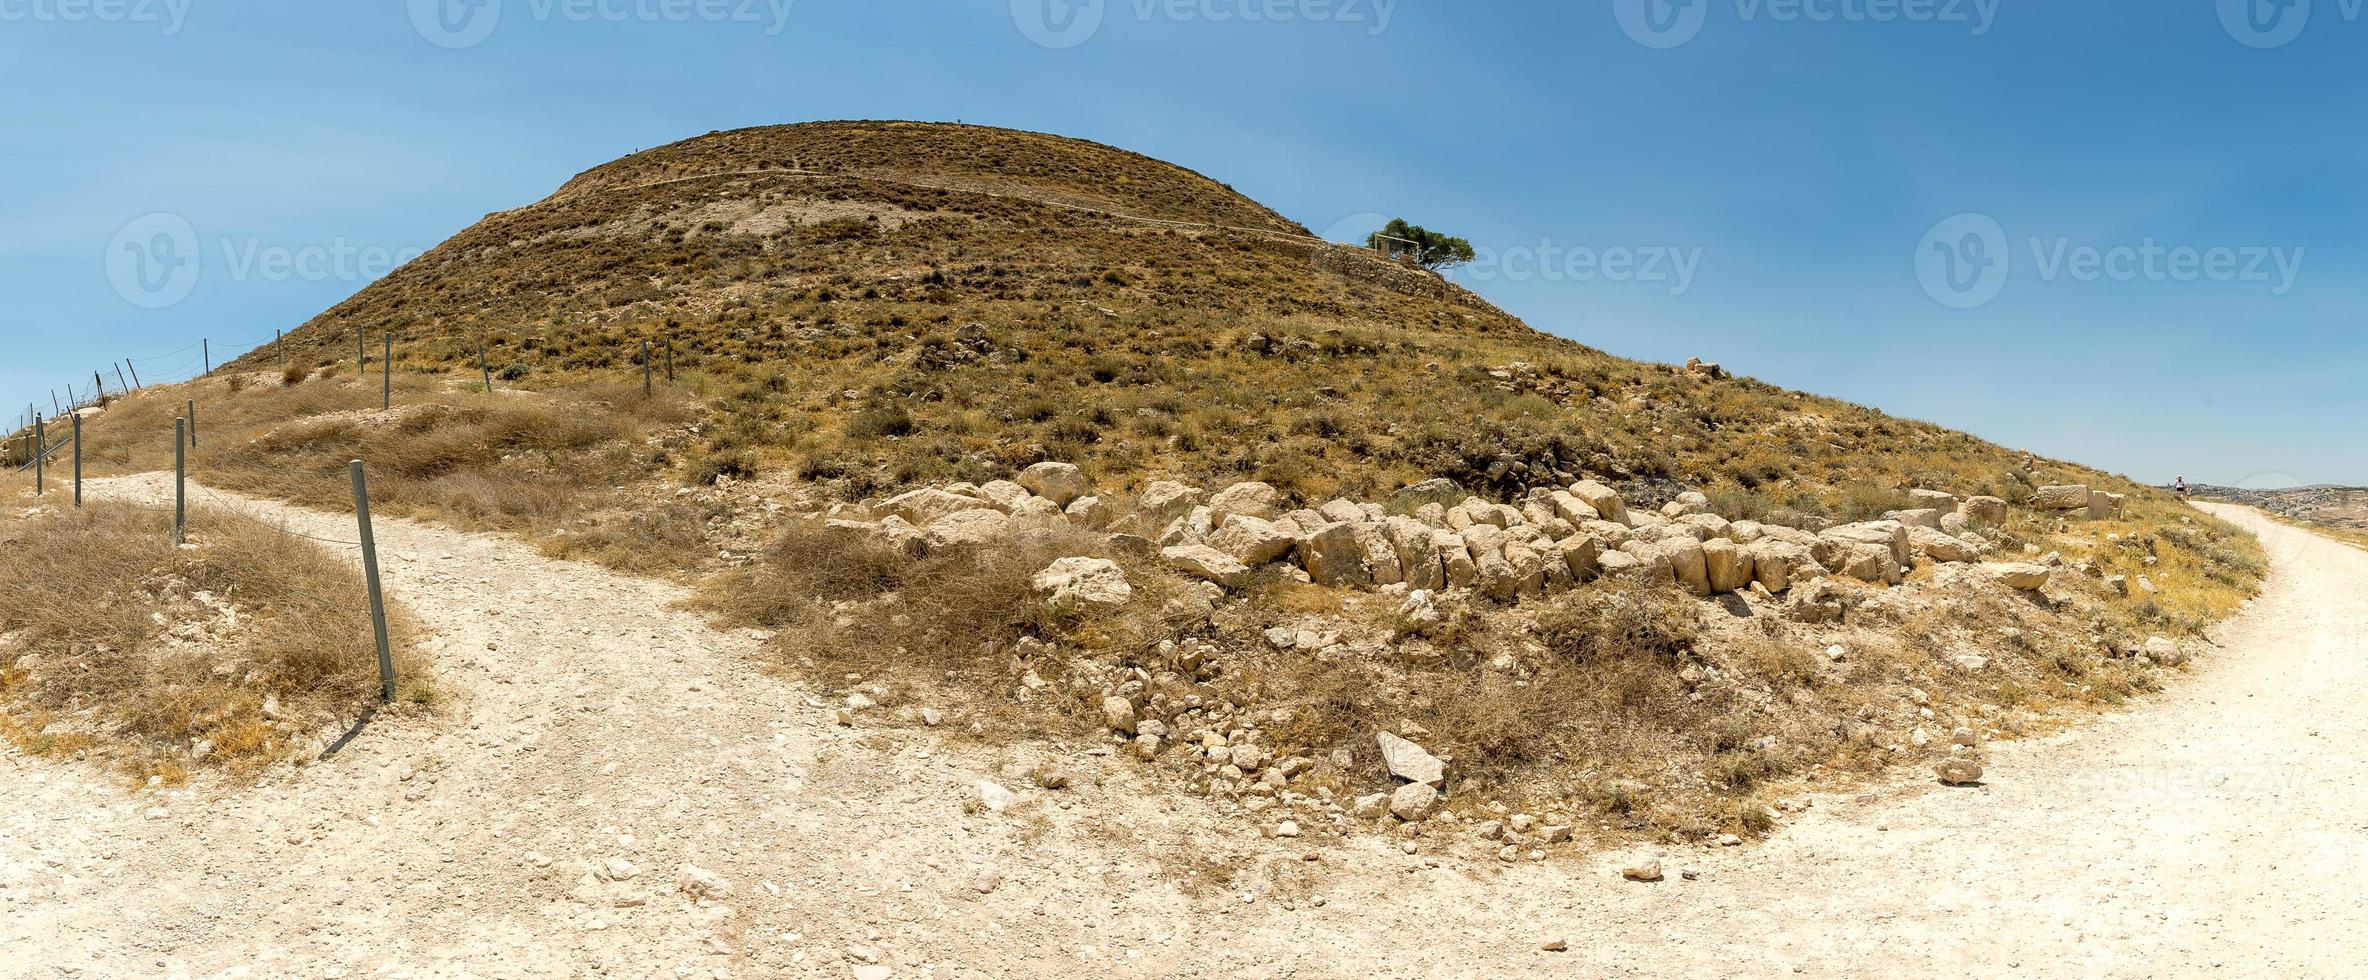 Landscape in Israel photo